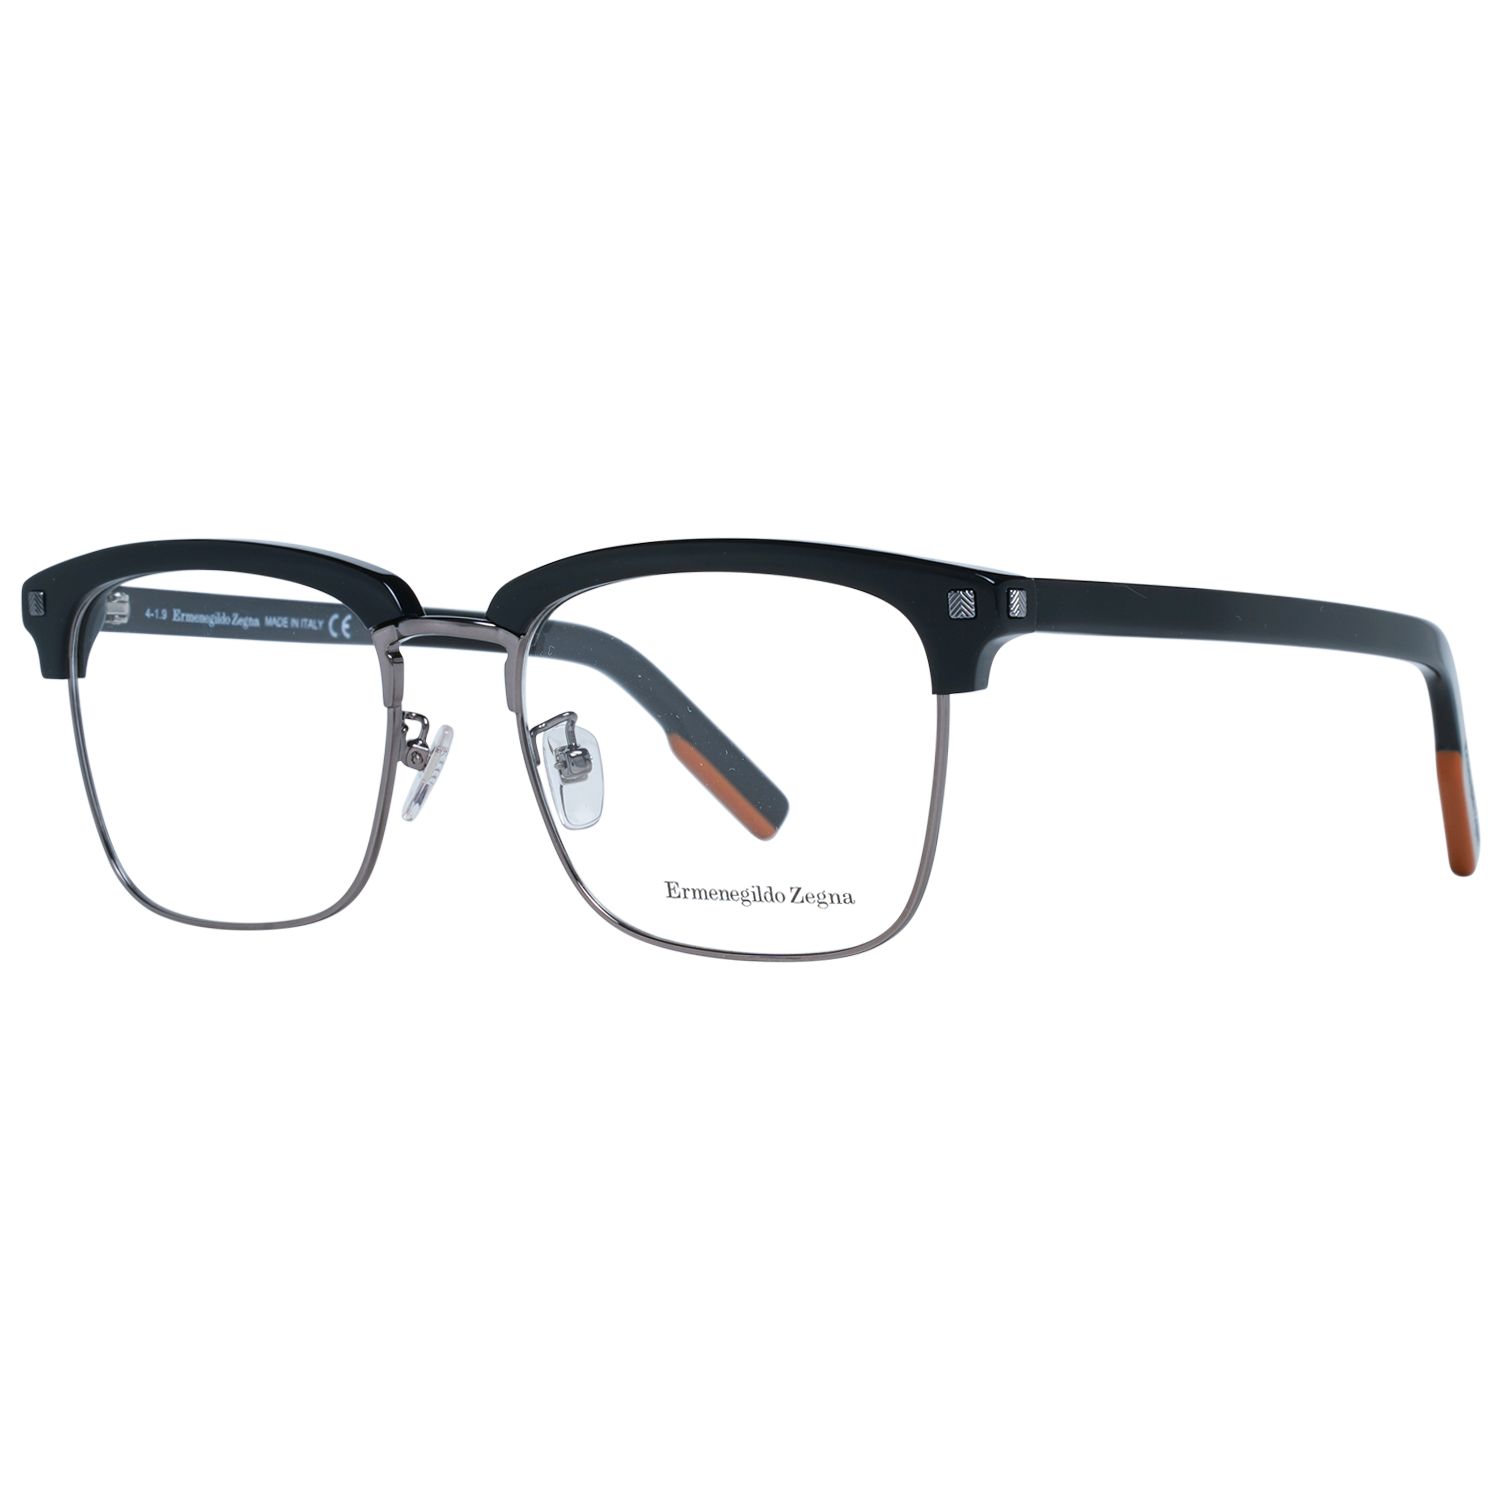 Ermenegildo Zegna Frames Ermenegildo Zegna Glasses Optical Frame EZ5139-F 001 54 Eyeglasses Eyewear UK USA Australia 